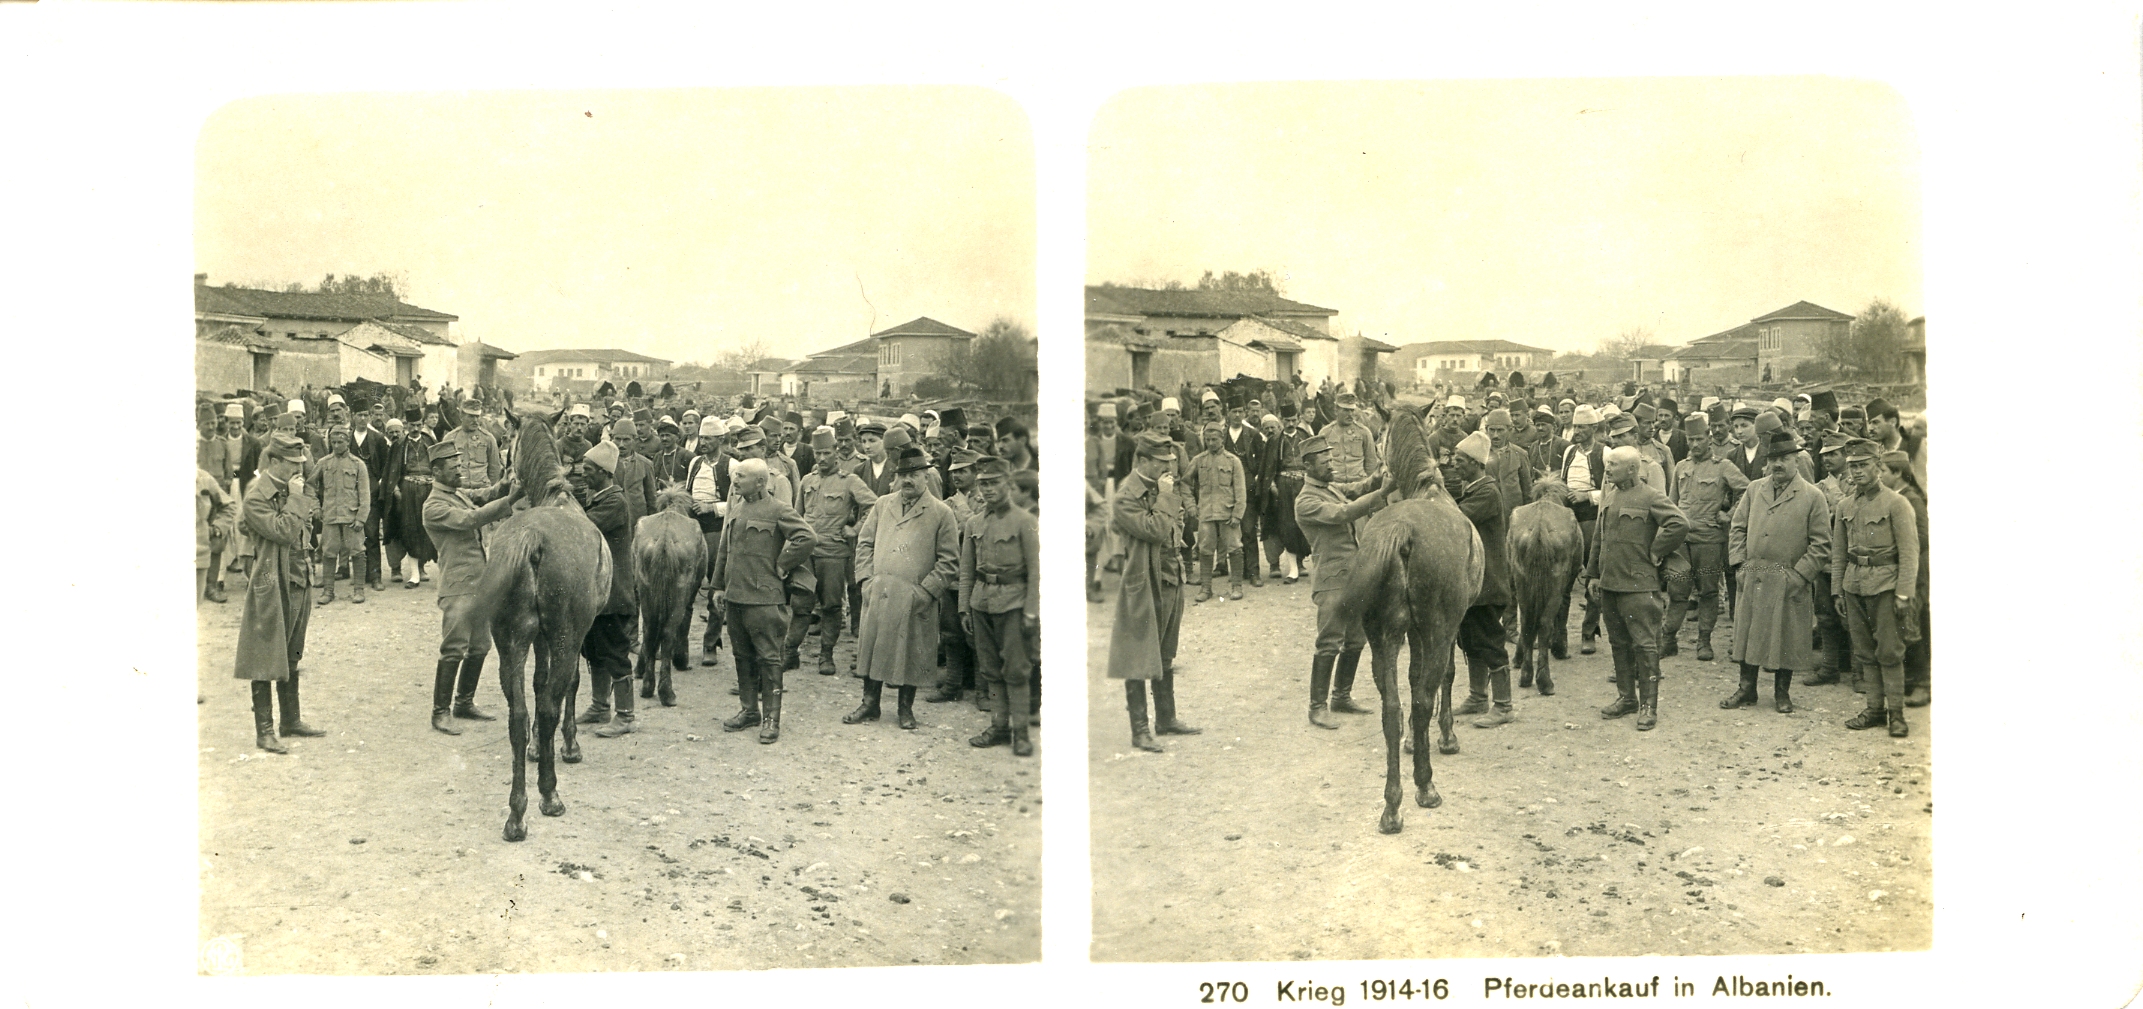 "Pferdeankauf in Albanien" - Buying horses in Albania